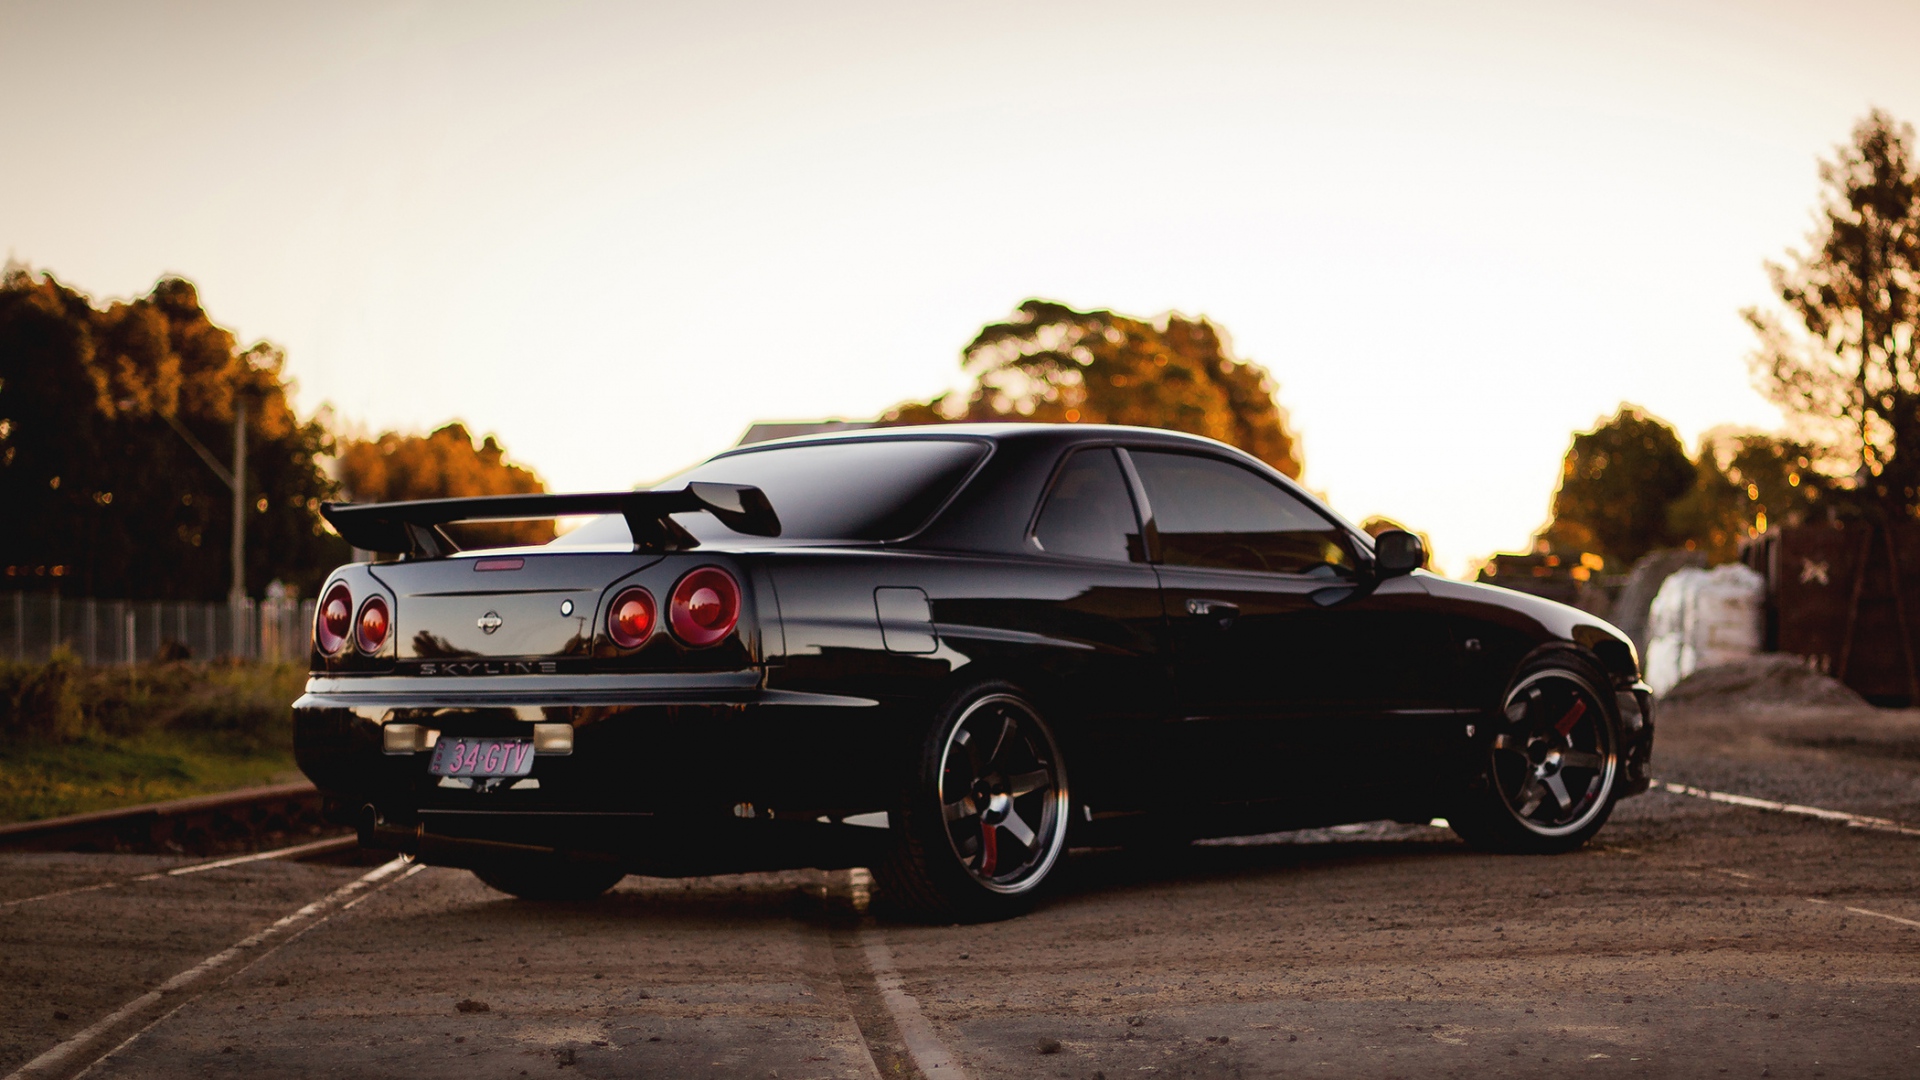 Nissan Gt R Black Edition Image